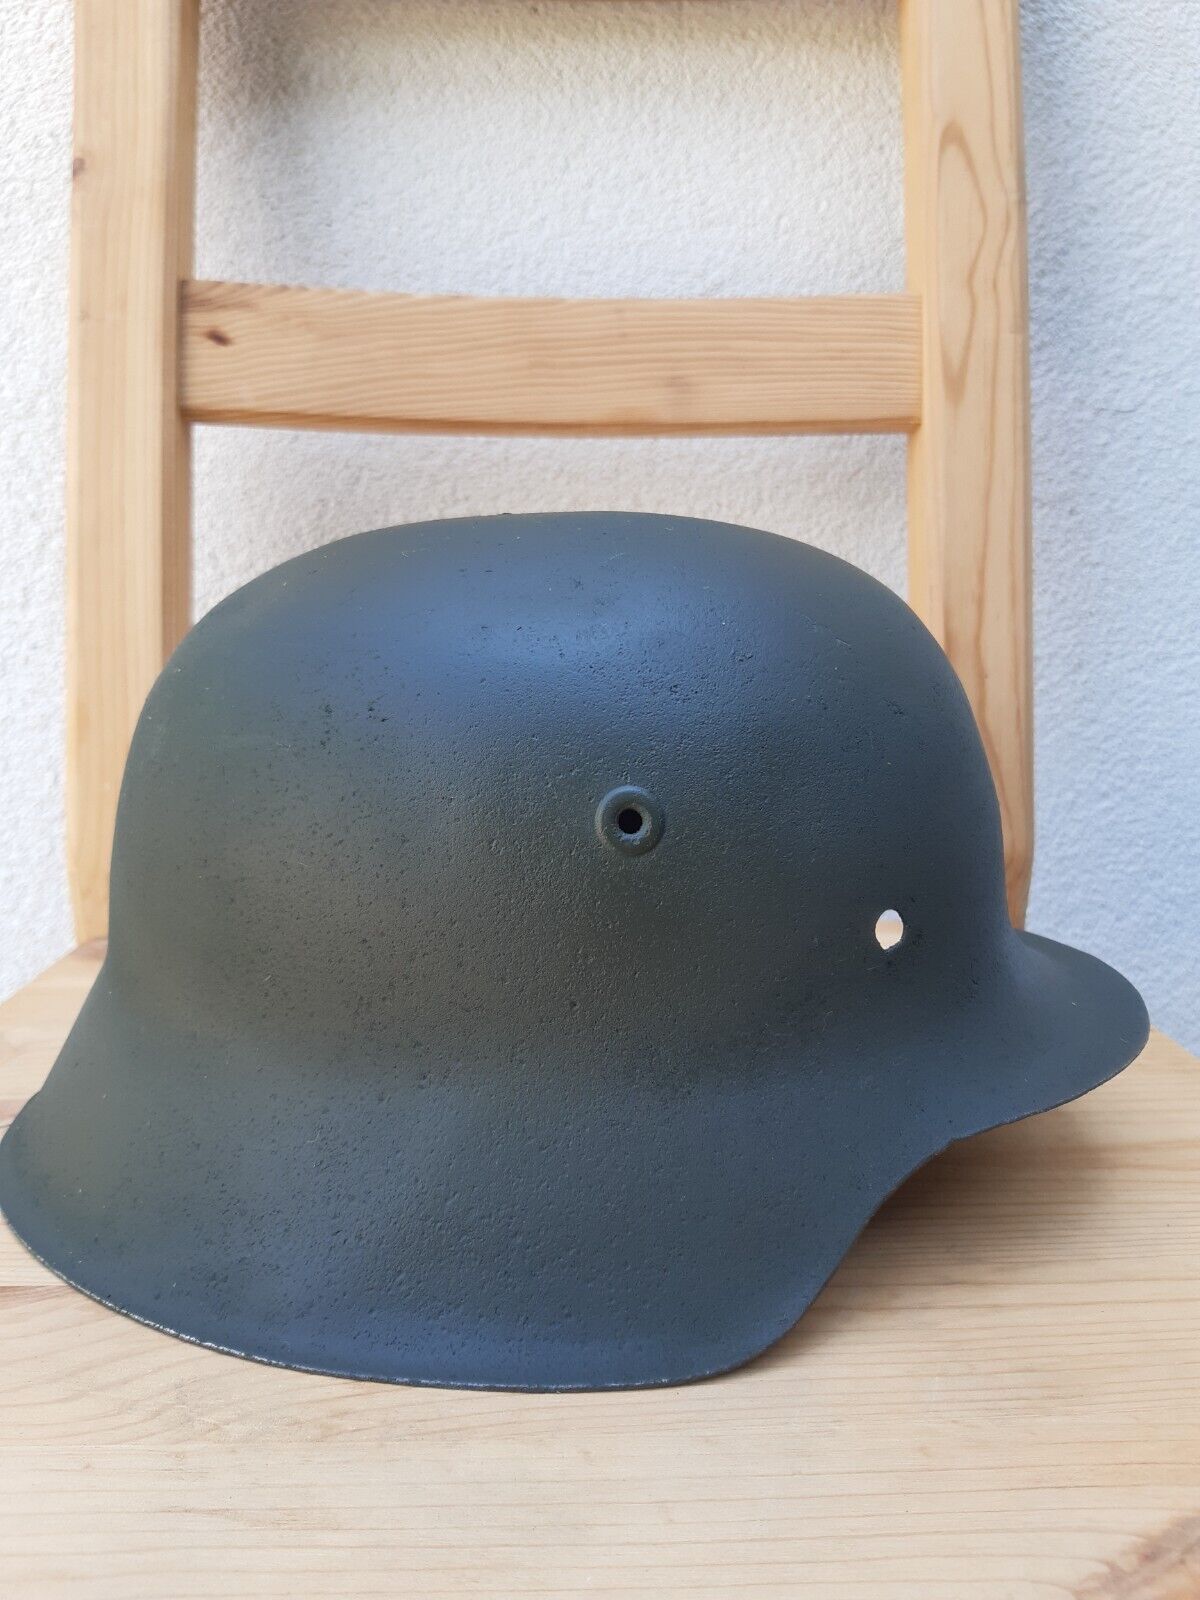 ww2 m42 german helmet.